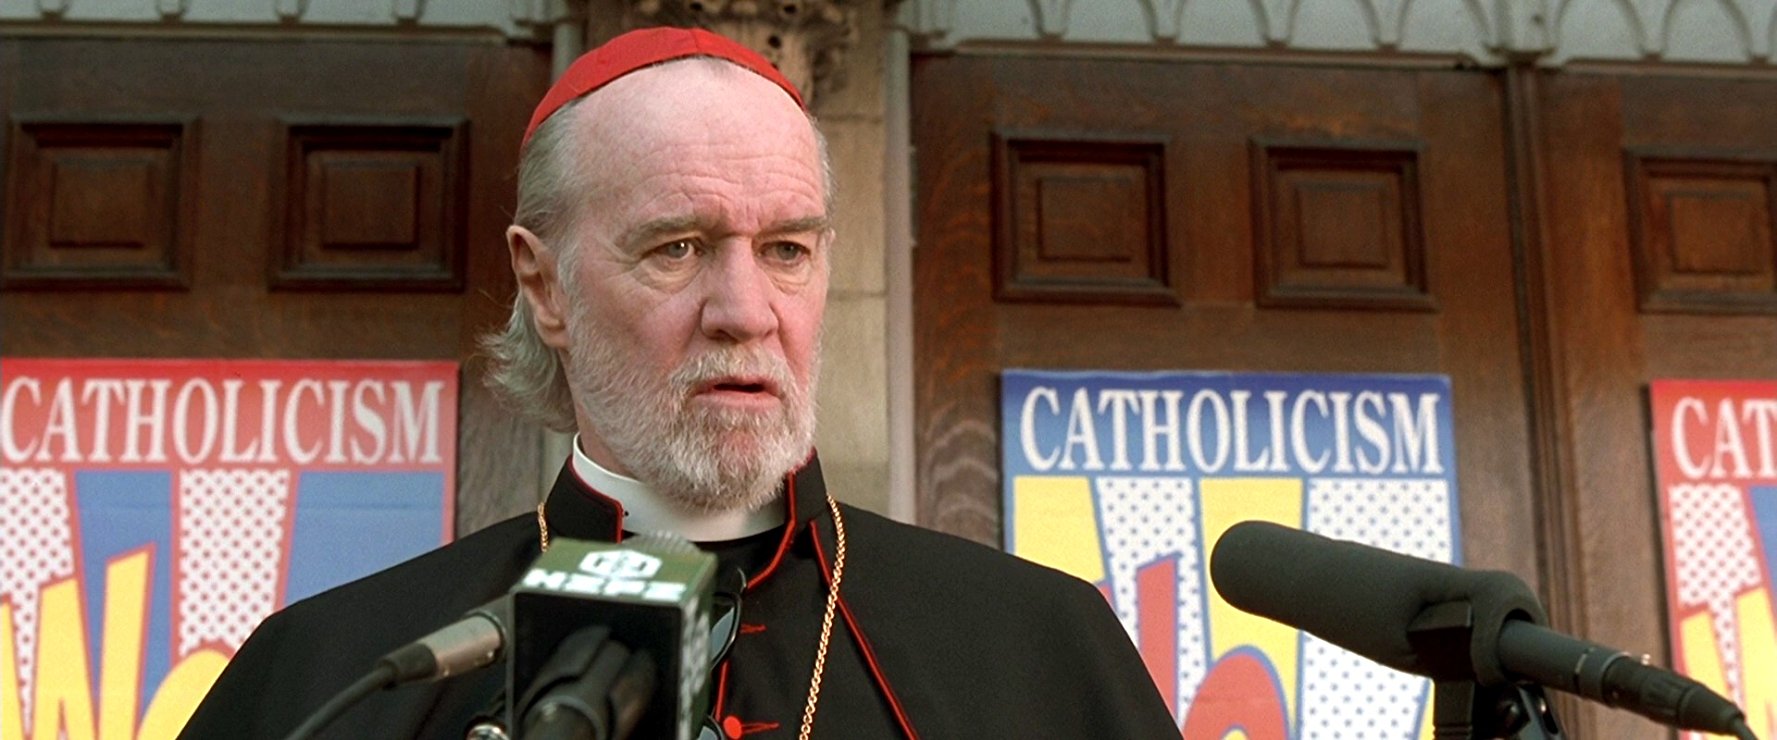 Cardinal Glick